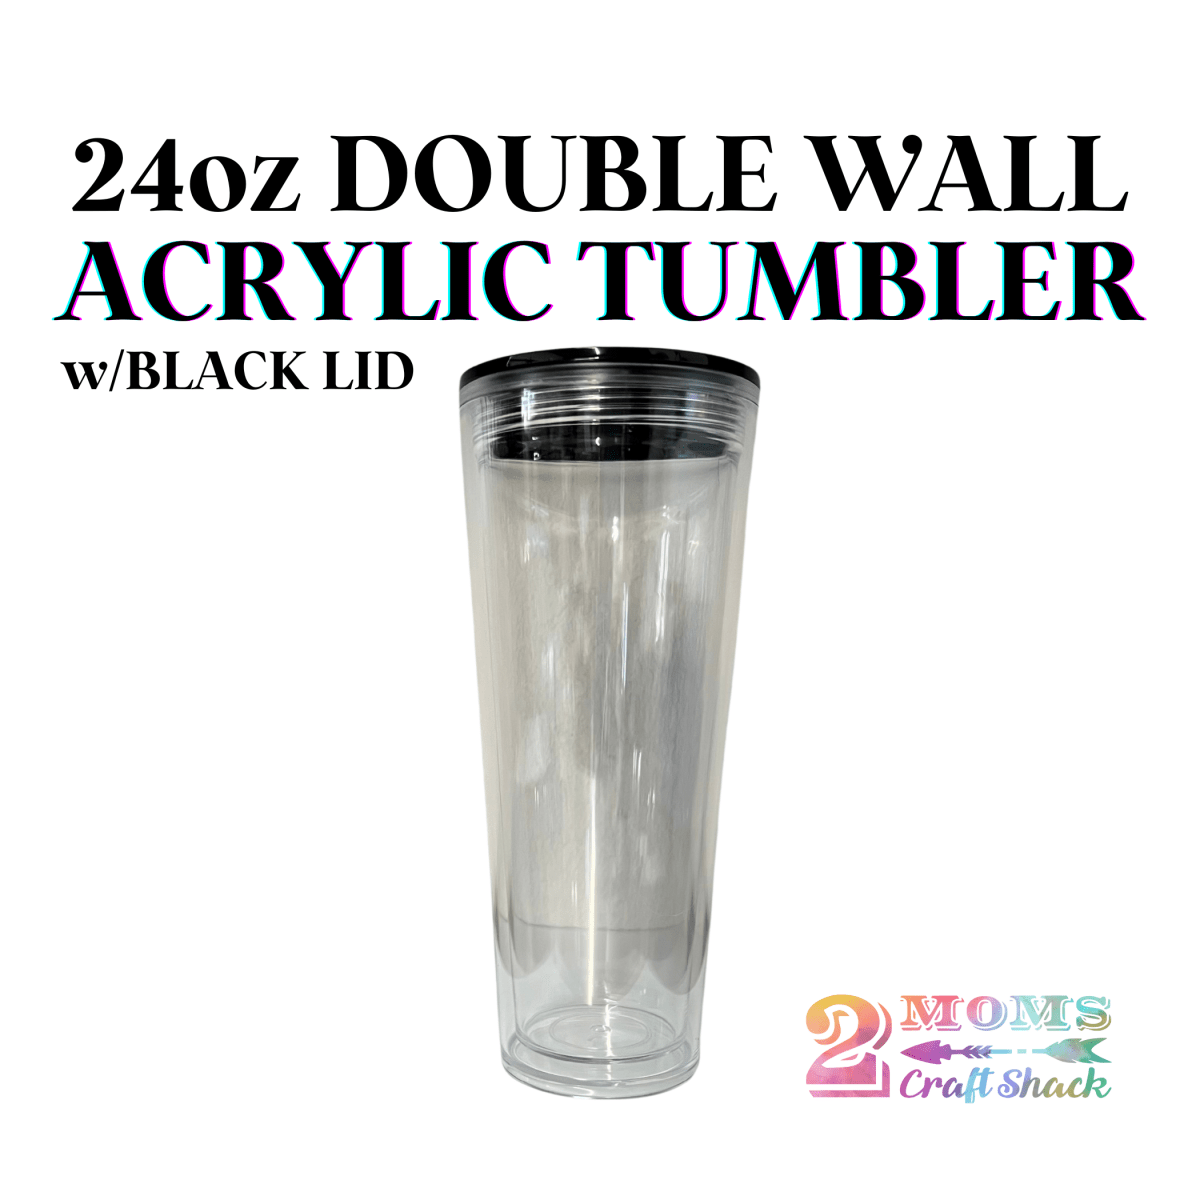 24oz DOUBLE WALL ACRYLIC TUMBLER W/BLACK LID - BLANK